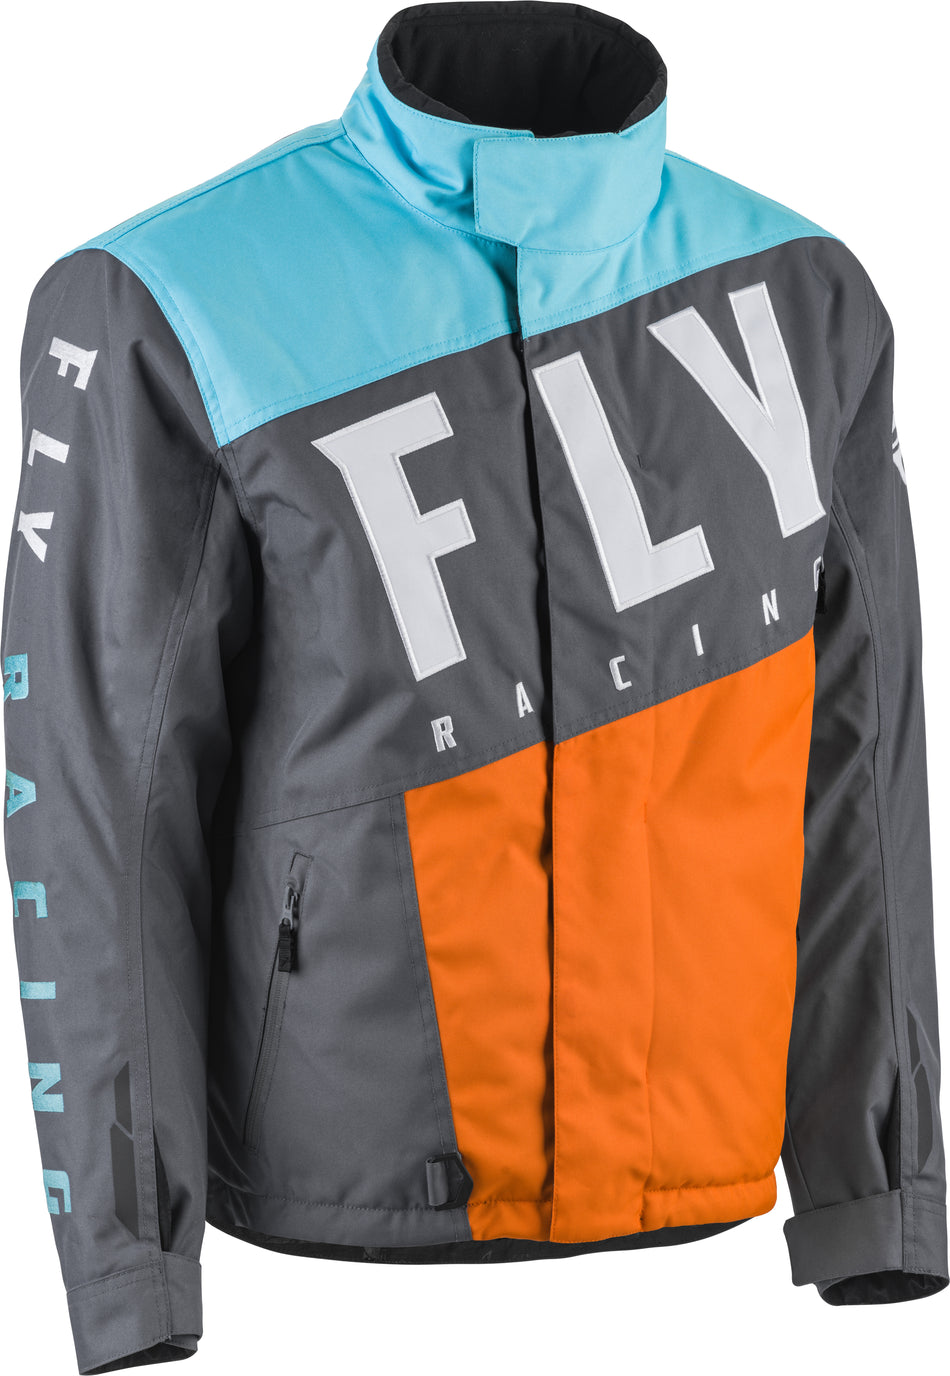 FLY RACING Youth Snx Pro Jacket Orange/Light Blue/Black Ys 470-4114YS